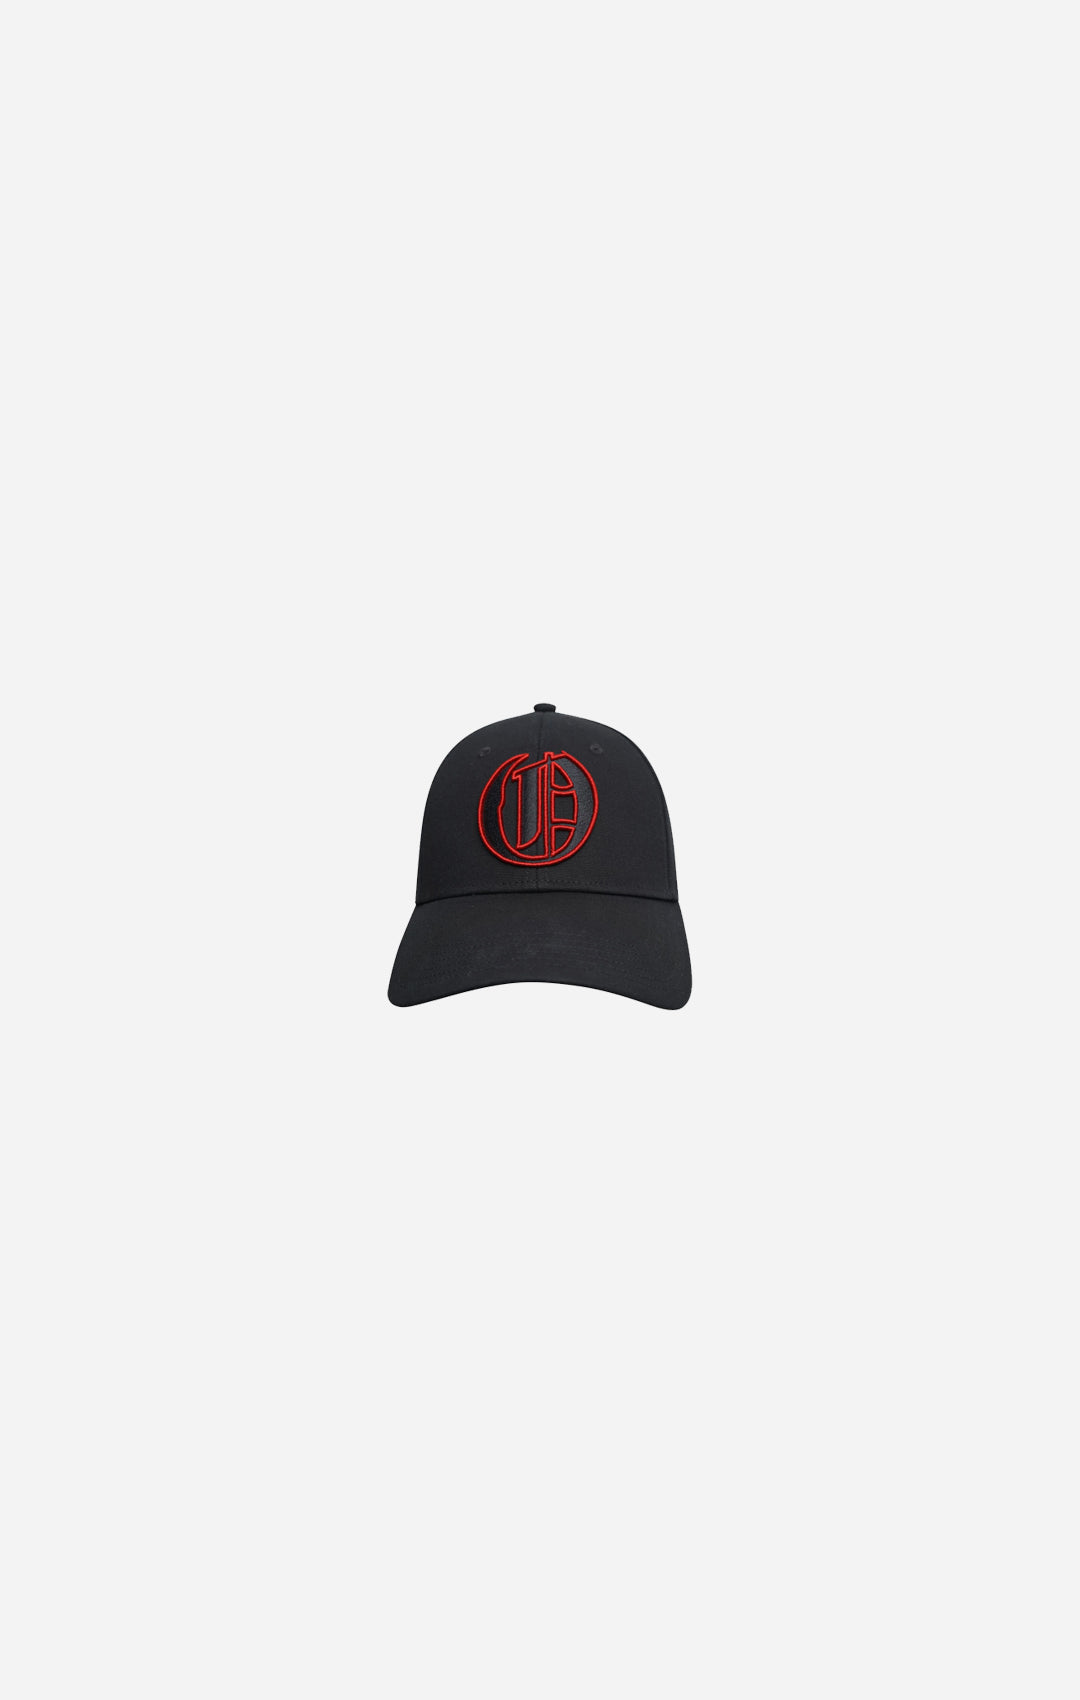 Black & Red Crew Baseball Cap